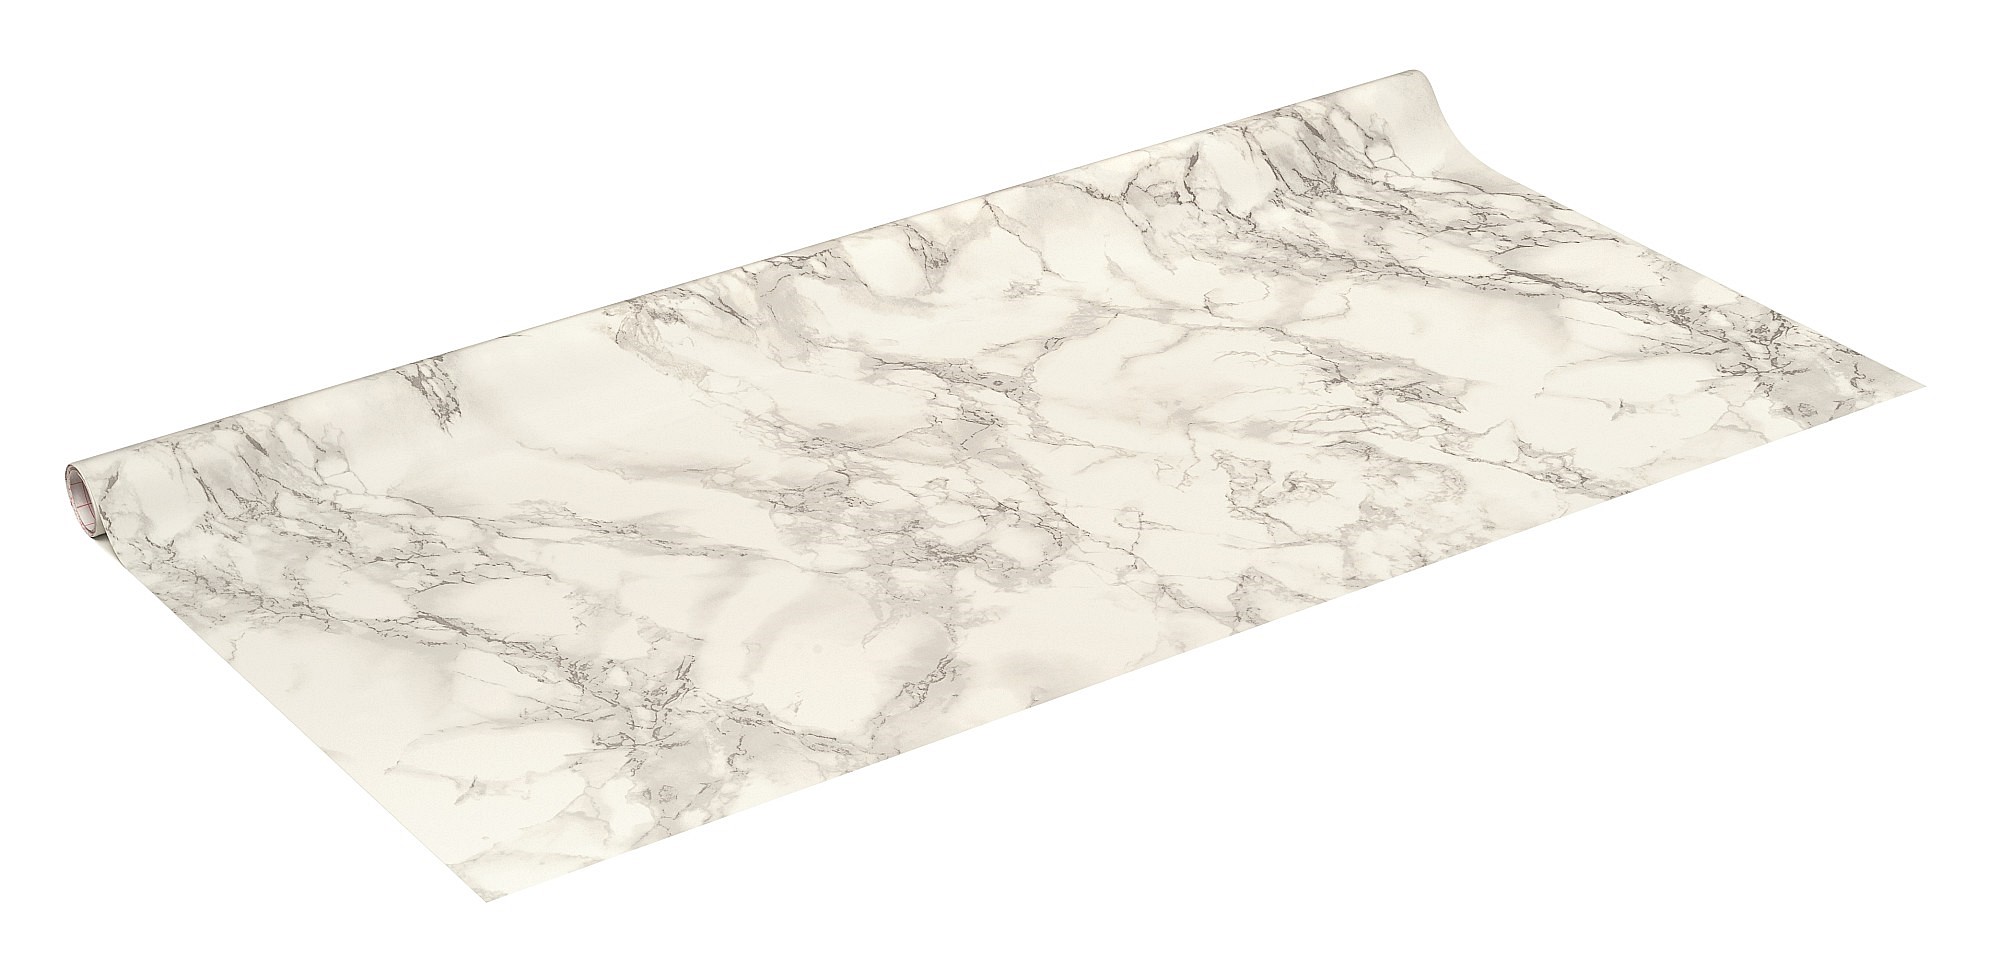 Adhésif décoratif marbre Marmi gris 2mX0.675m